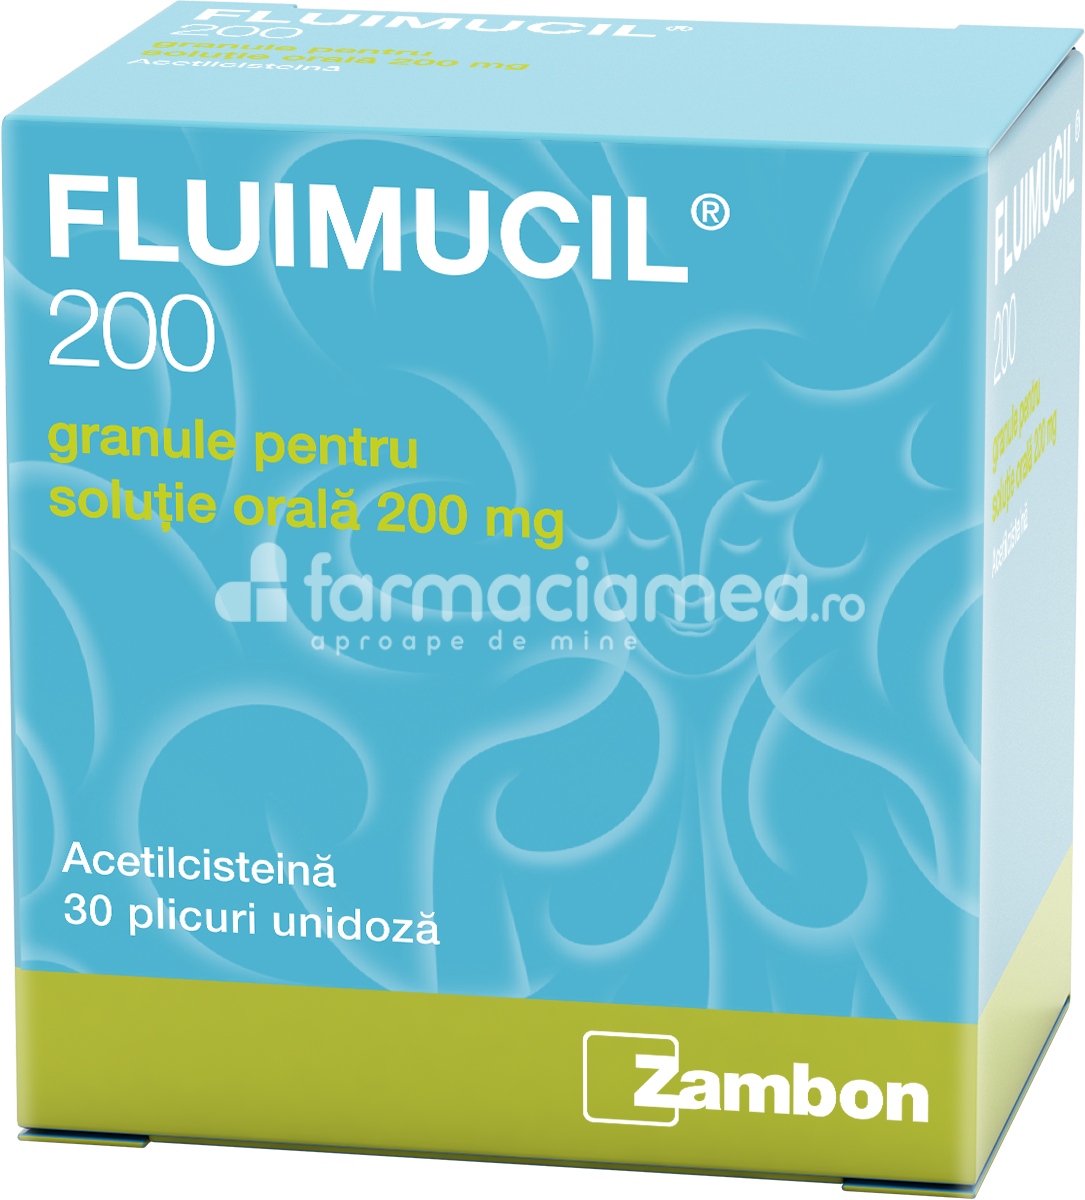 Tuse ambele forme OTC - Fluimucil 200mg/plic granule solutie orala, tuse productiva, 30 de plicuri, Zambon, farmaciamea.ro